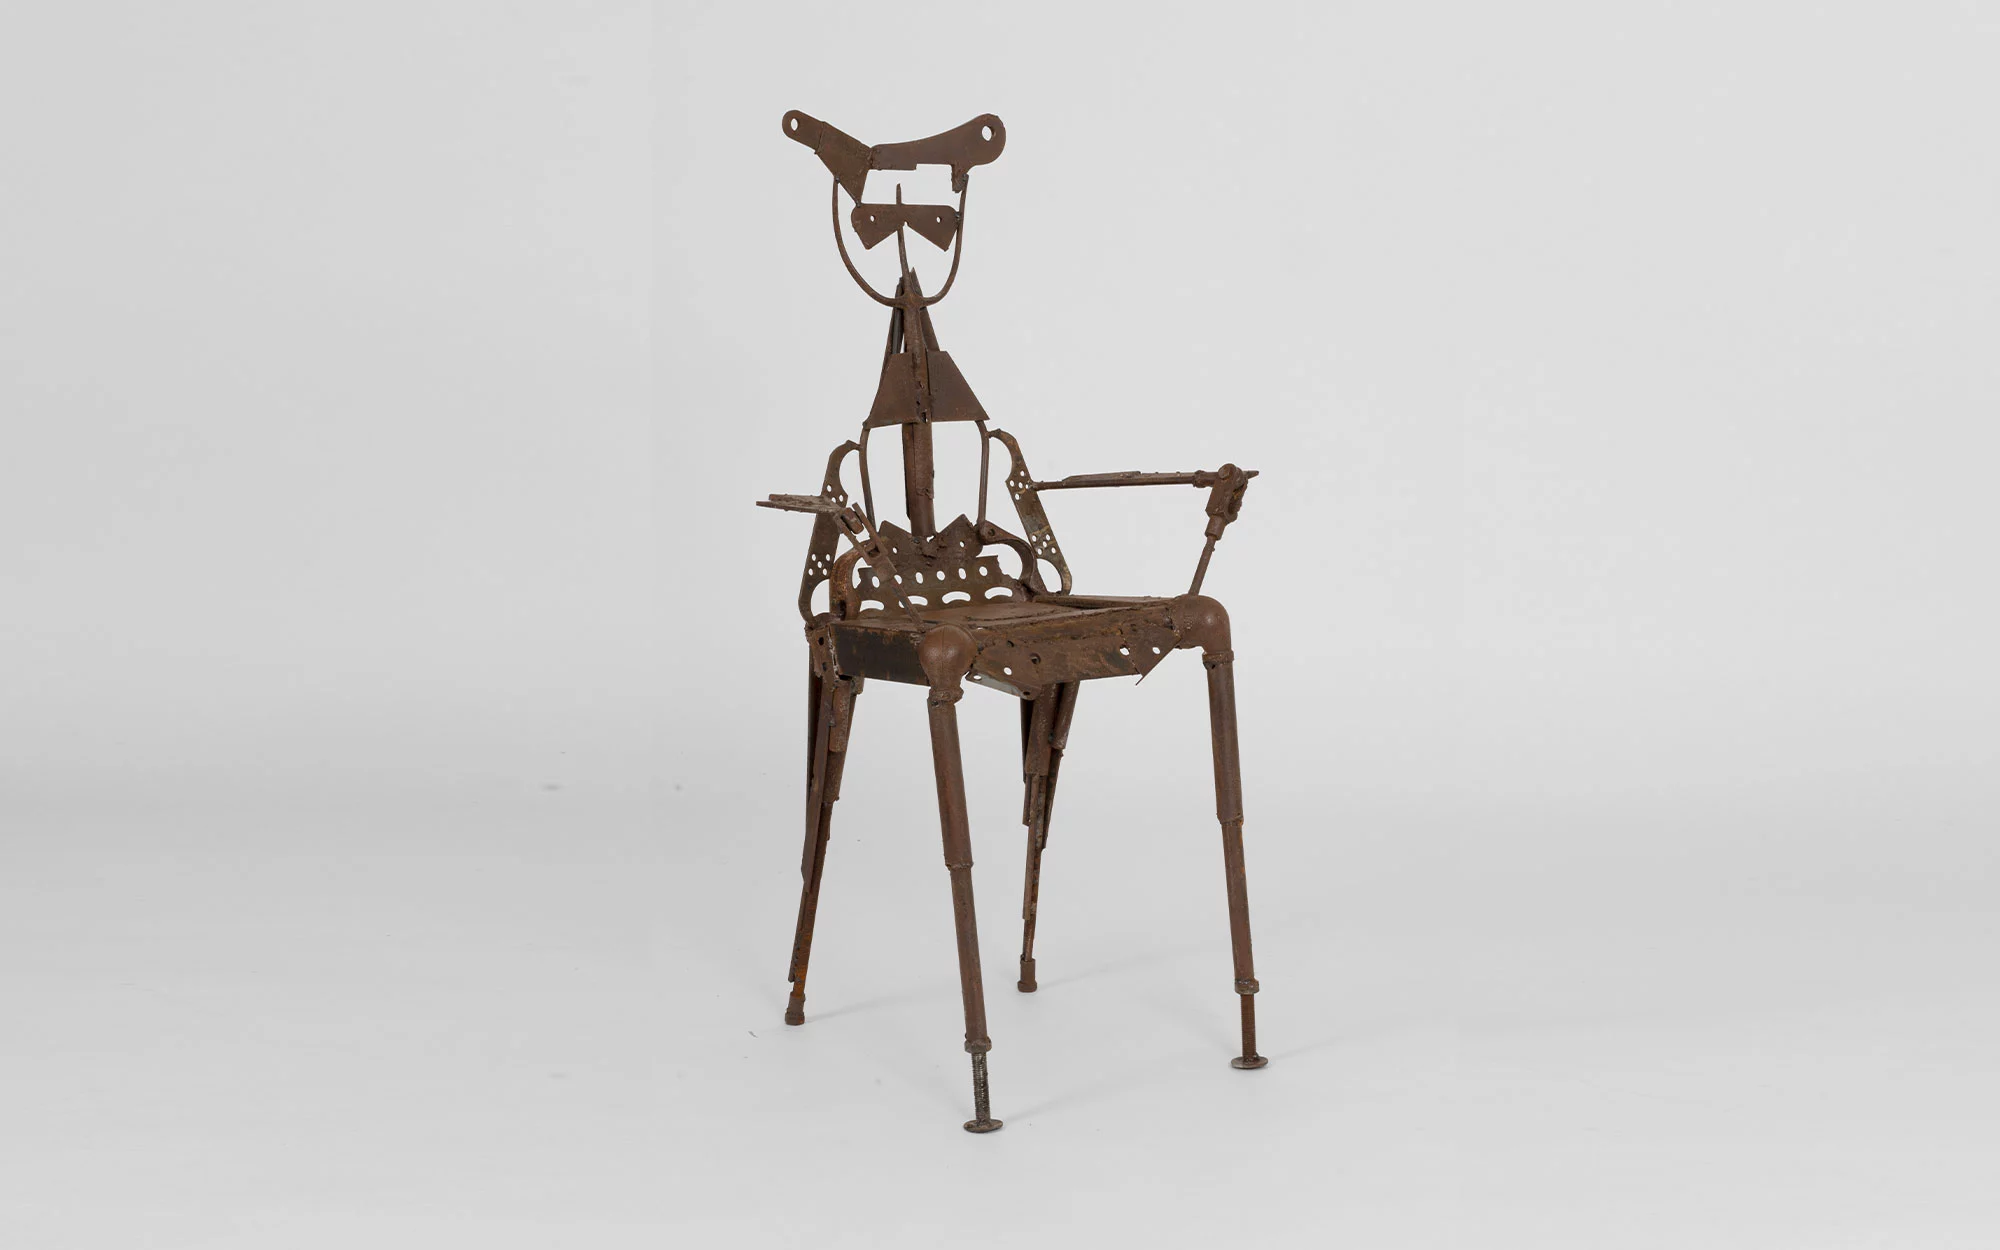 Queen Chair - Tom Dixon - armchair 20202020202020202020202020202020- Galerie kreo